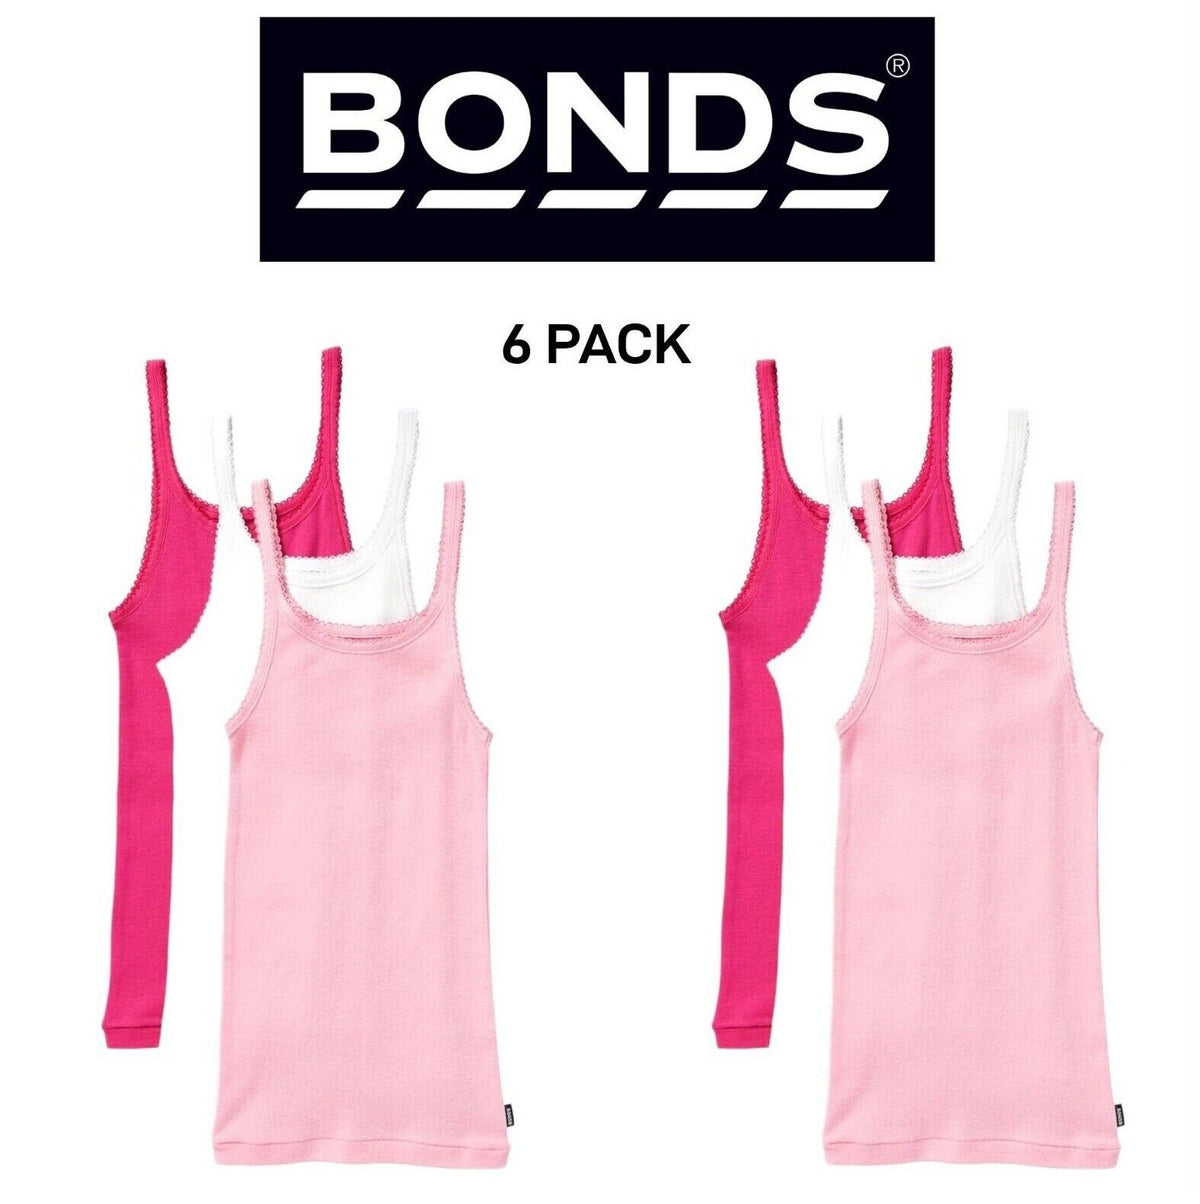 Bonds Girls Teena Singlet Super Soft Cotton Comfortable Top 6 Pack UYG43W